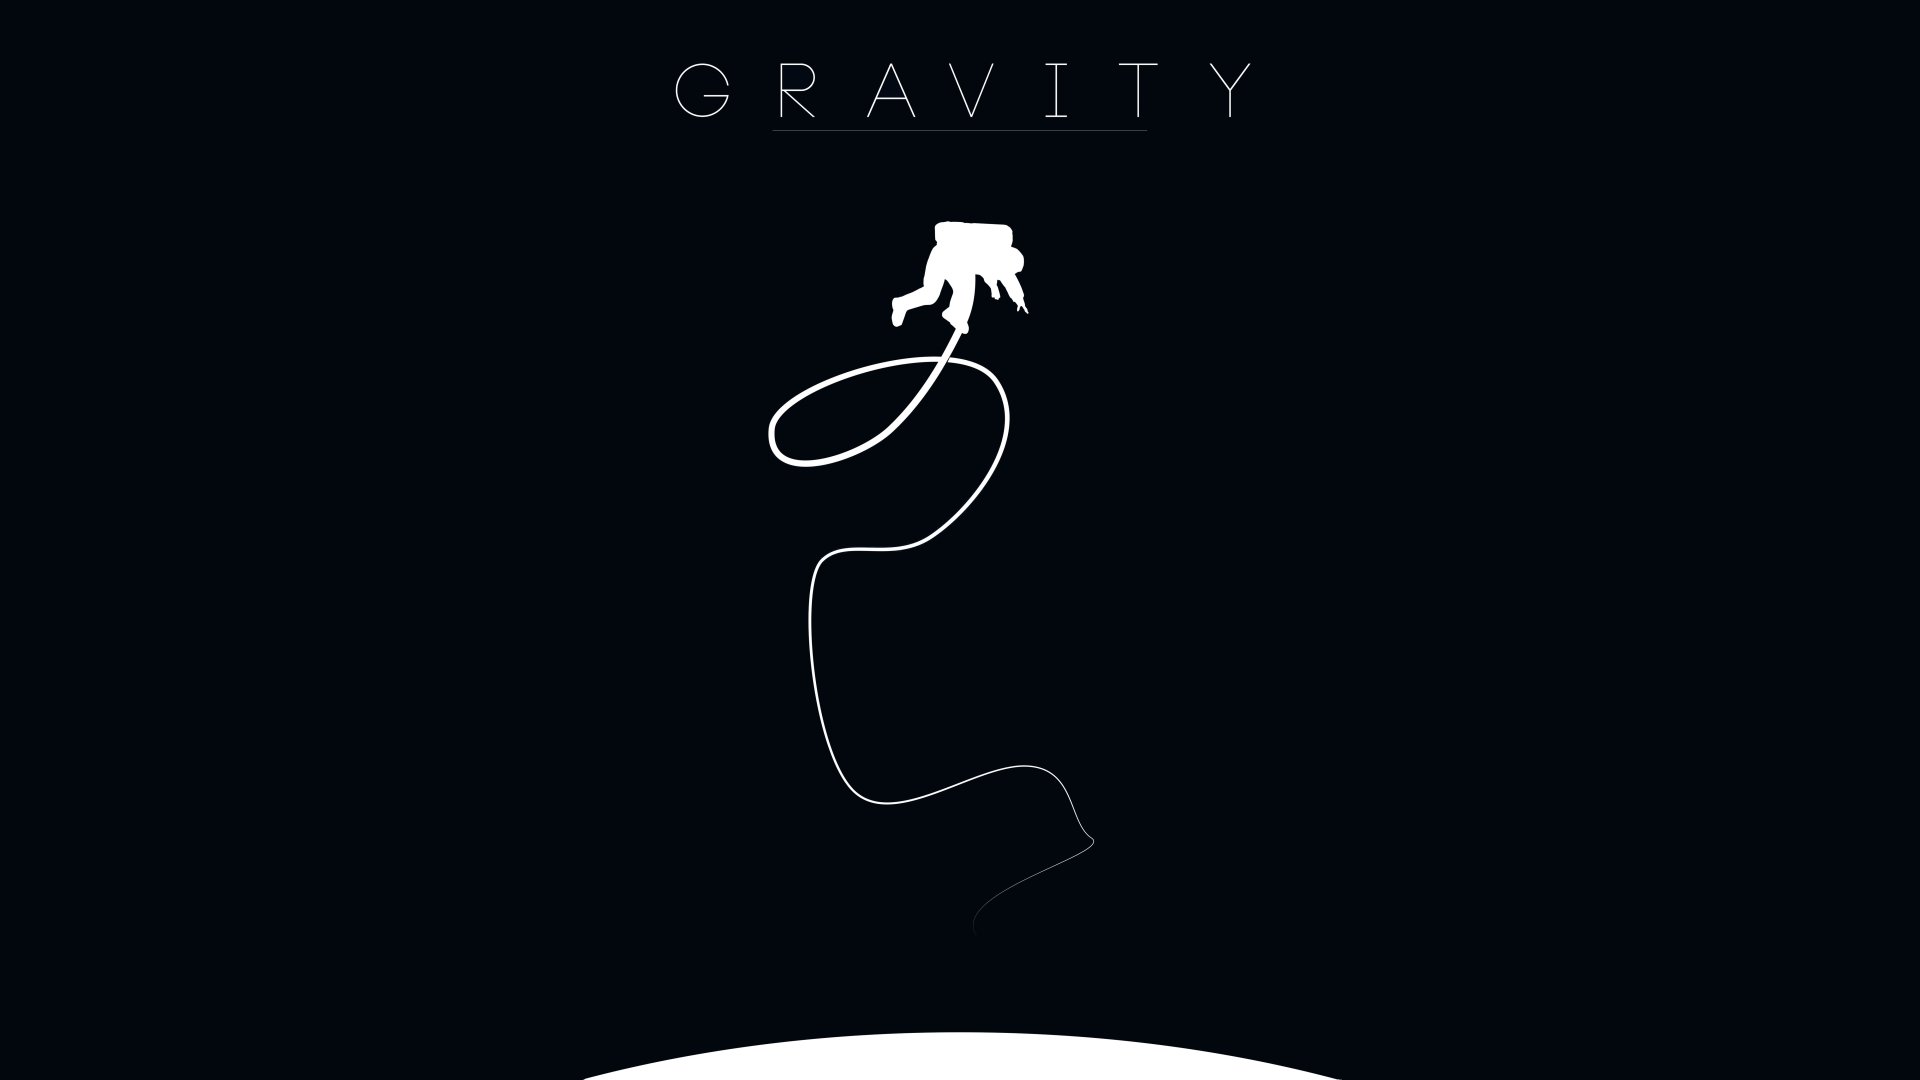 Gravity 8k Ultra HD Wallpaper | Background Image | 8000x4500 | ID